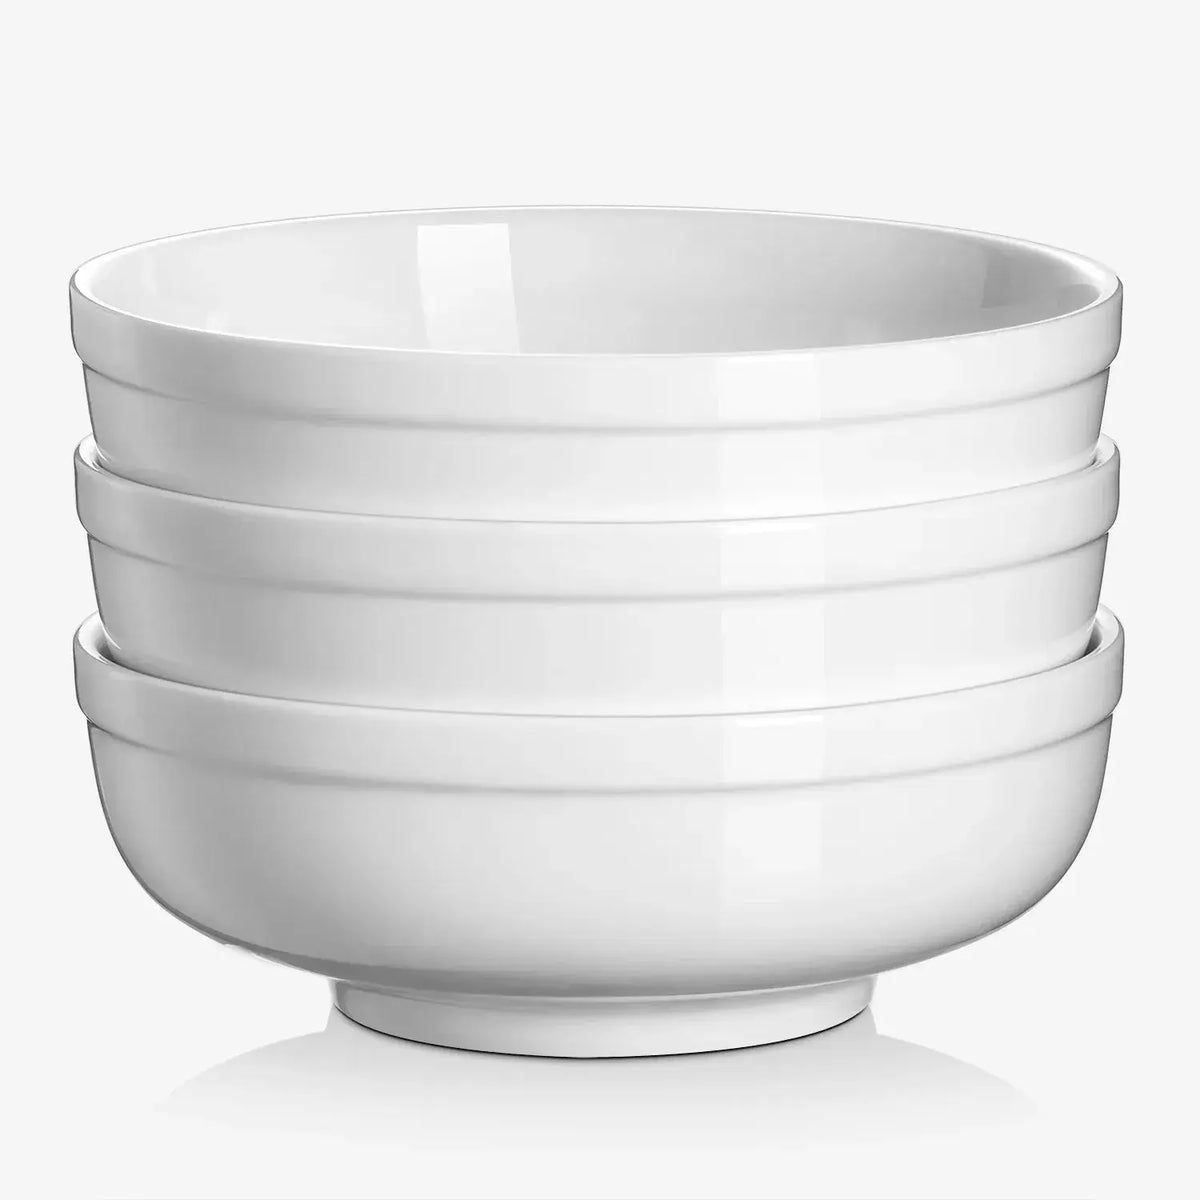 Big Soup Bowls - Set of 2